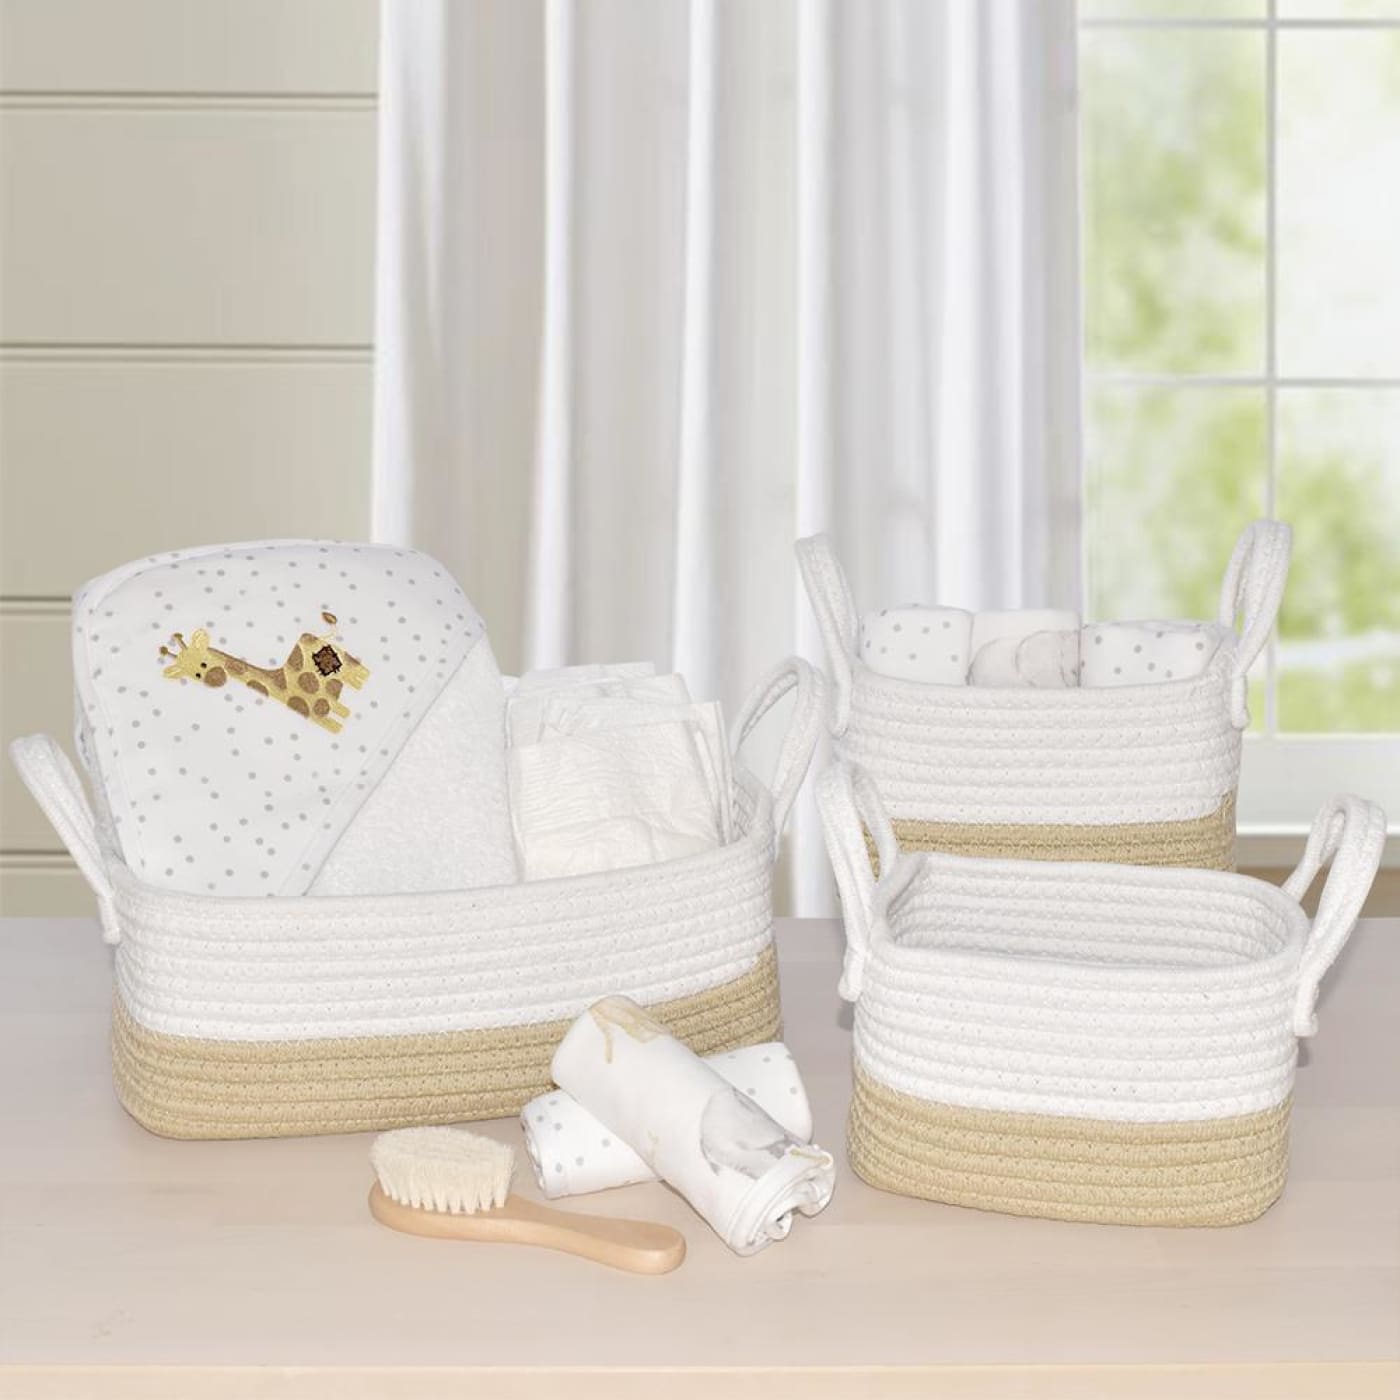 Living Textiles Cotton Rope Nursery Storage Set 3PC - White/Natural - White/Natural - NURSERY & BEDTIME - HAMPERS/STORAGE